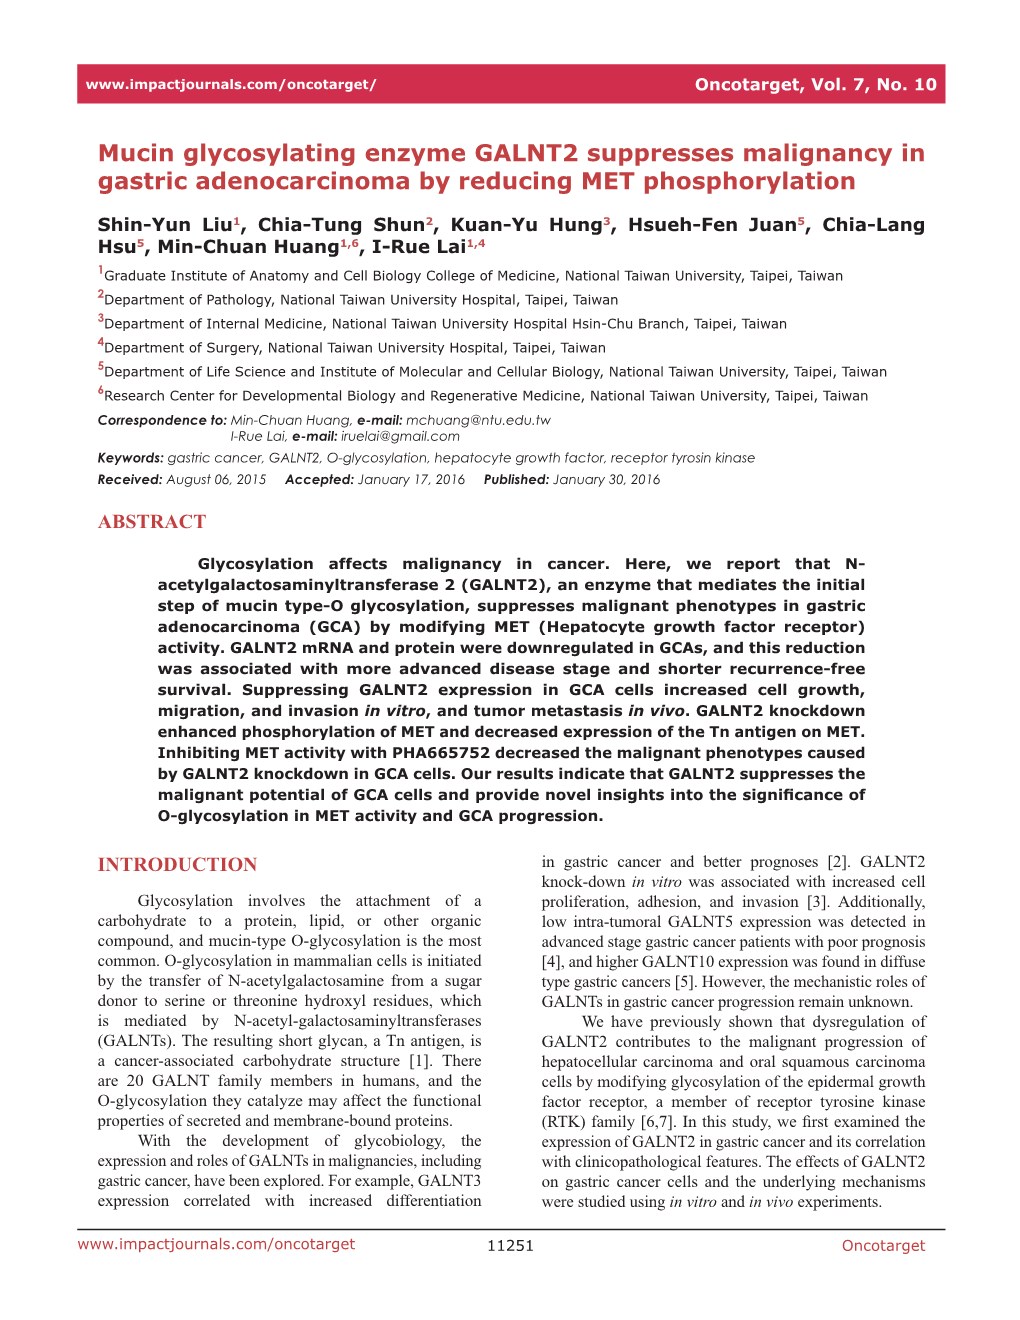 Mucin Glycosylating Enzyme GALNT2 Suppresses Malignancy in Gastric Adenocarcinoma by Reducing MET Phosphorylation